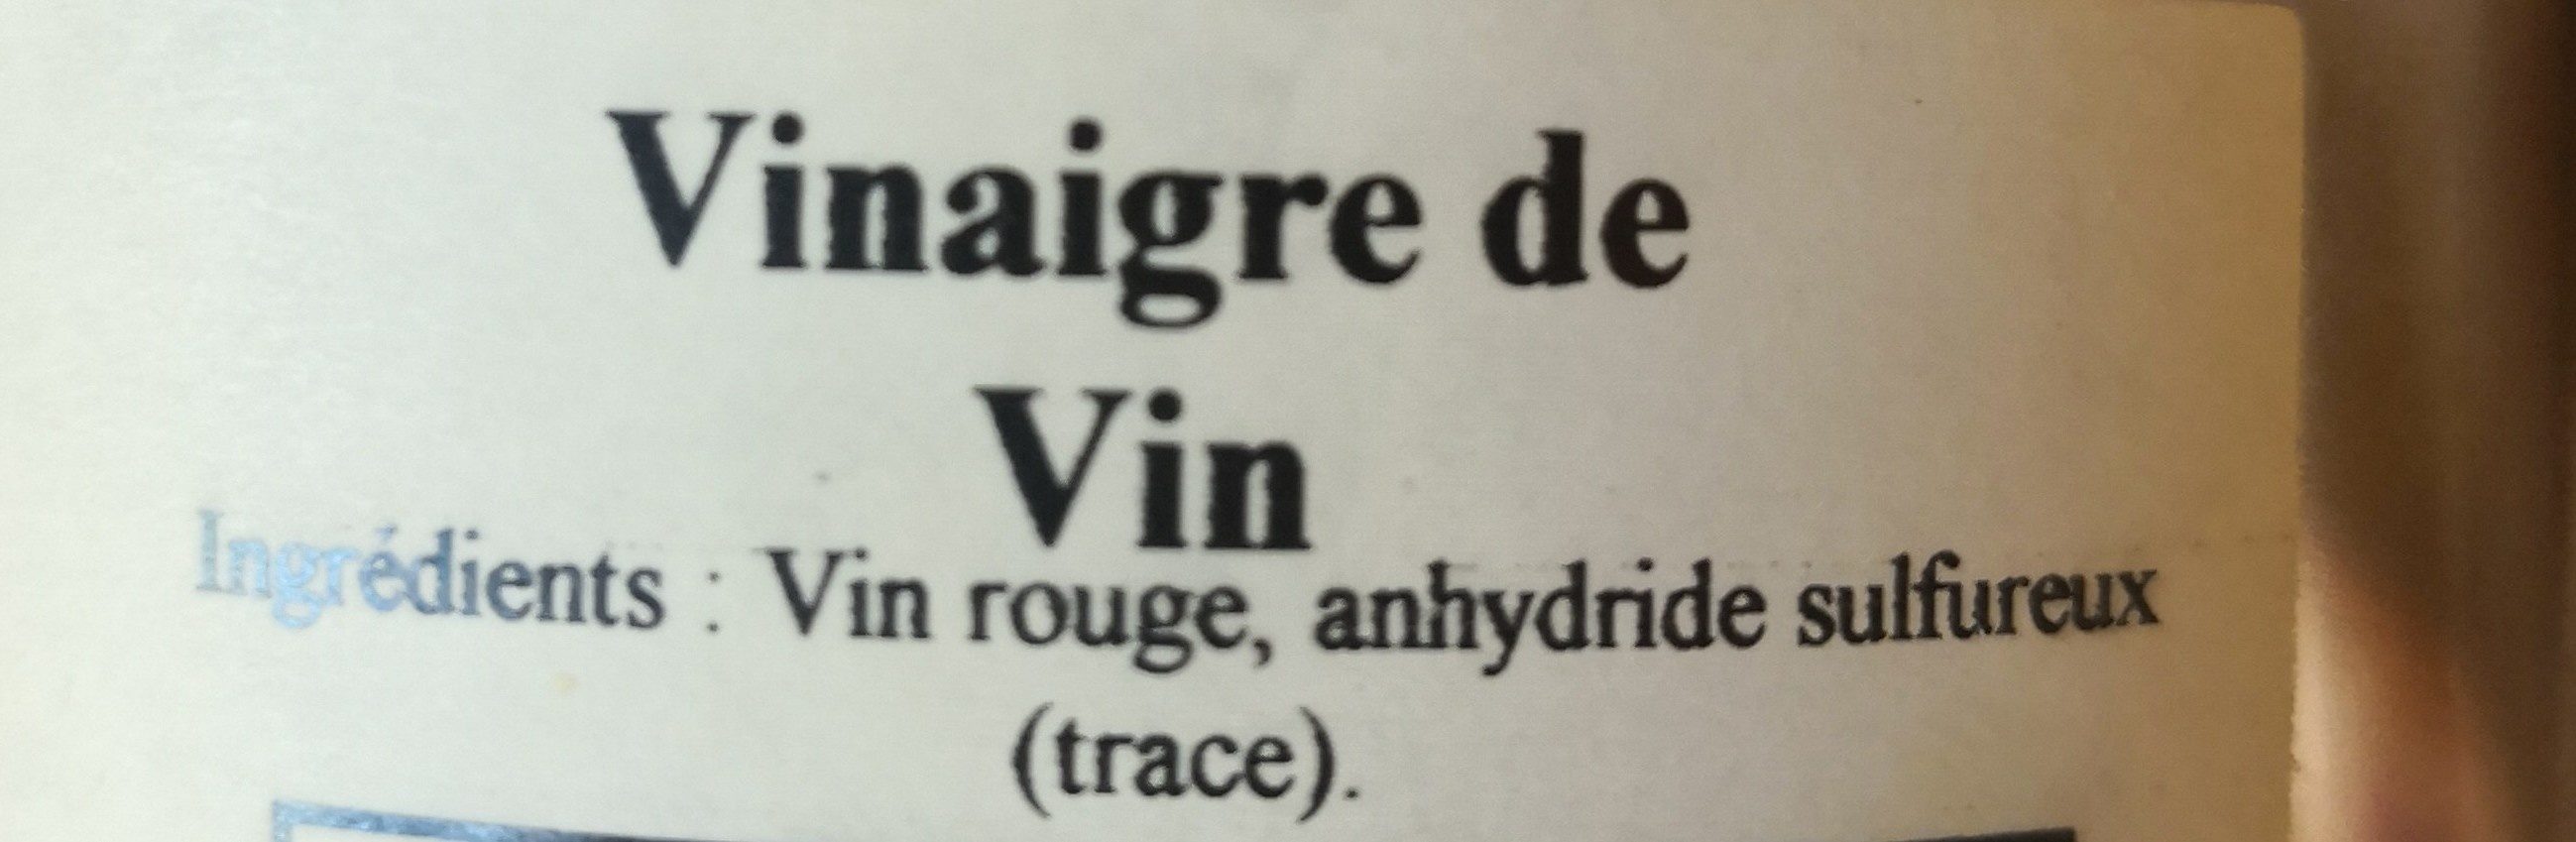 Vinaigre de vin - Ingredients - fr